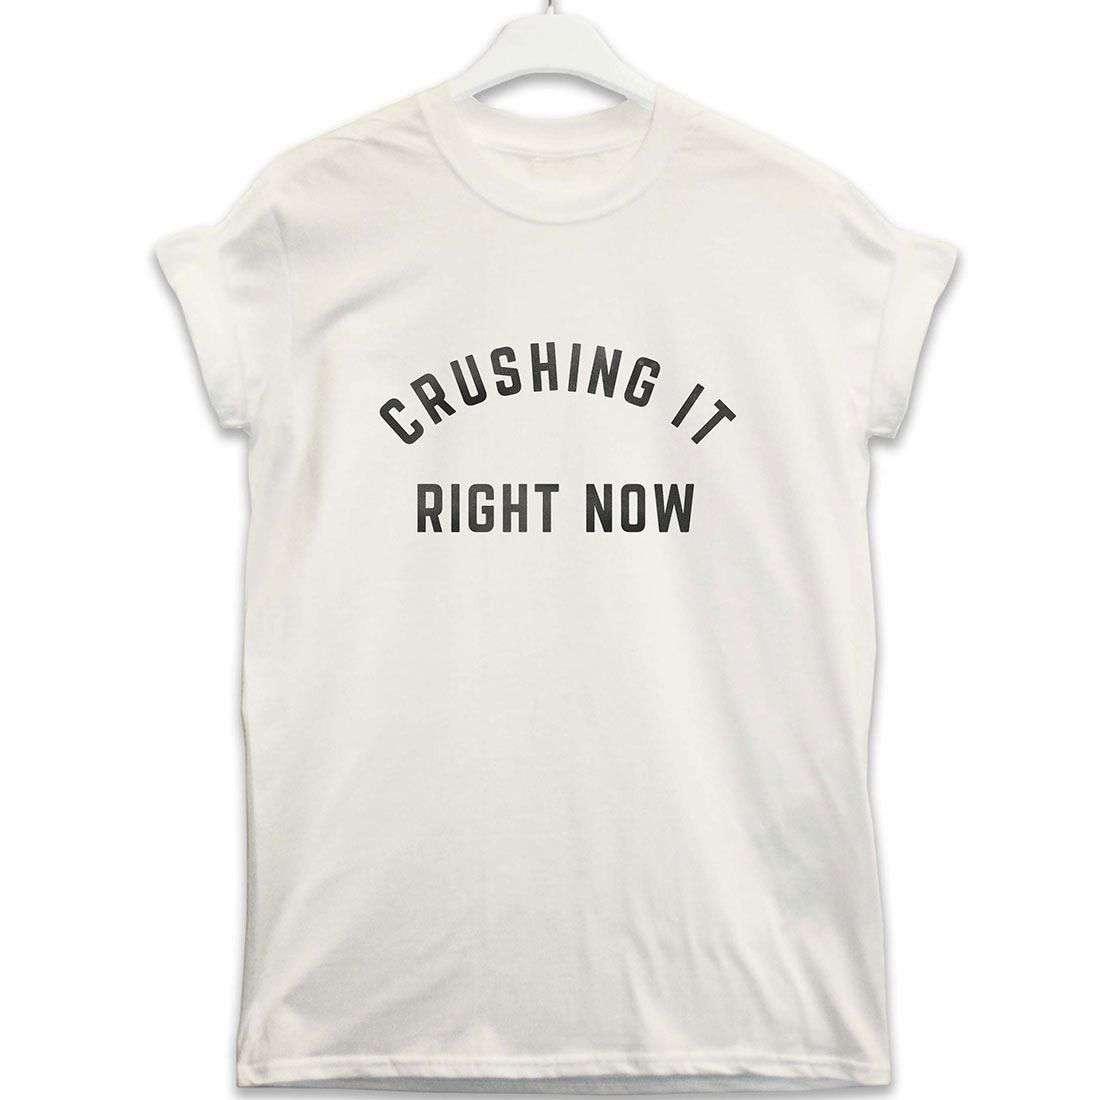 Crushing It Mens Graphic T-Shirt 8Ball